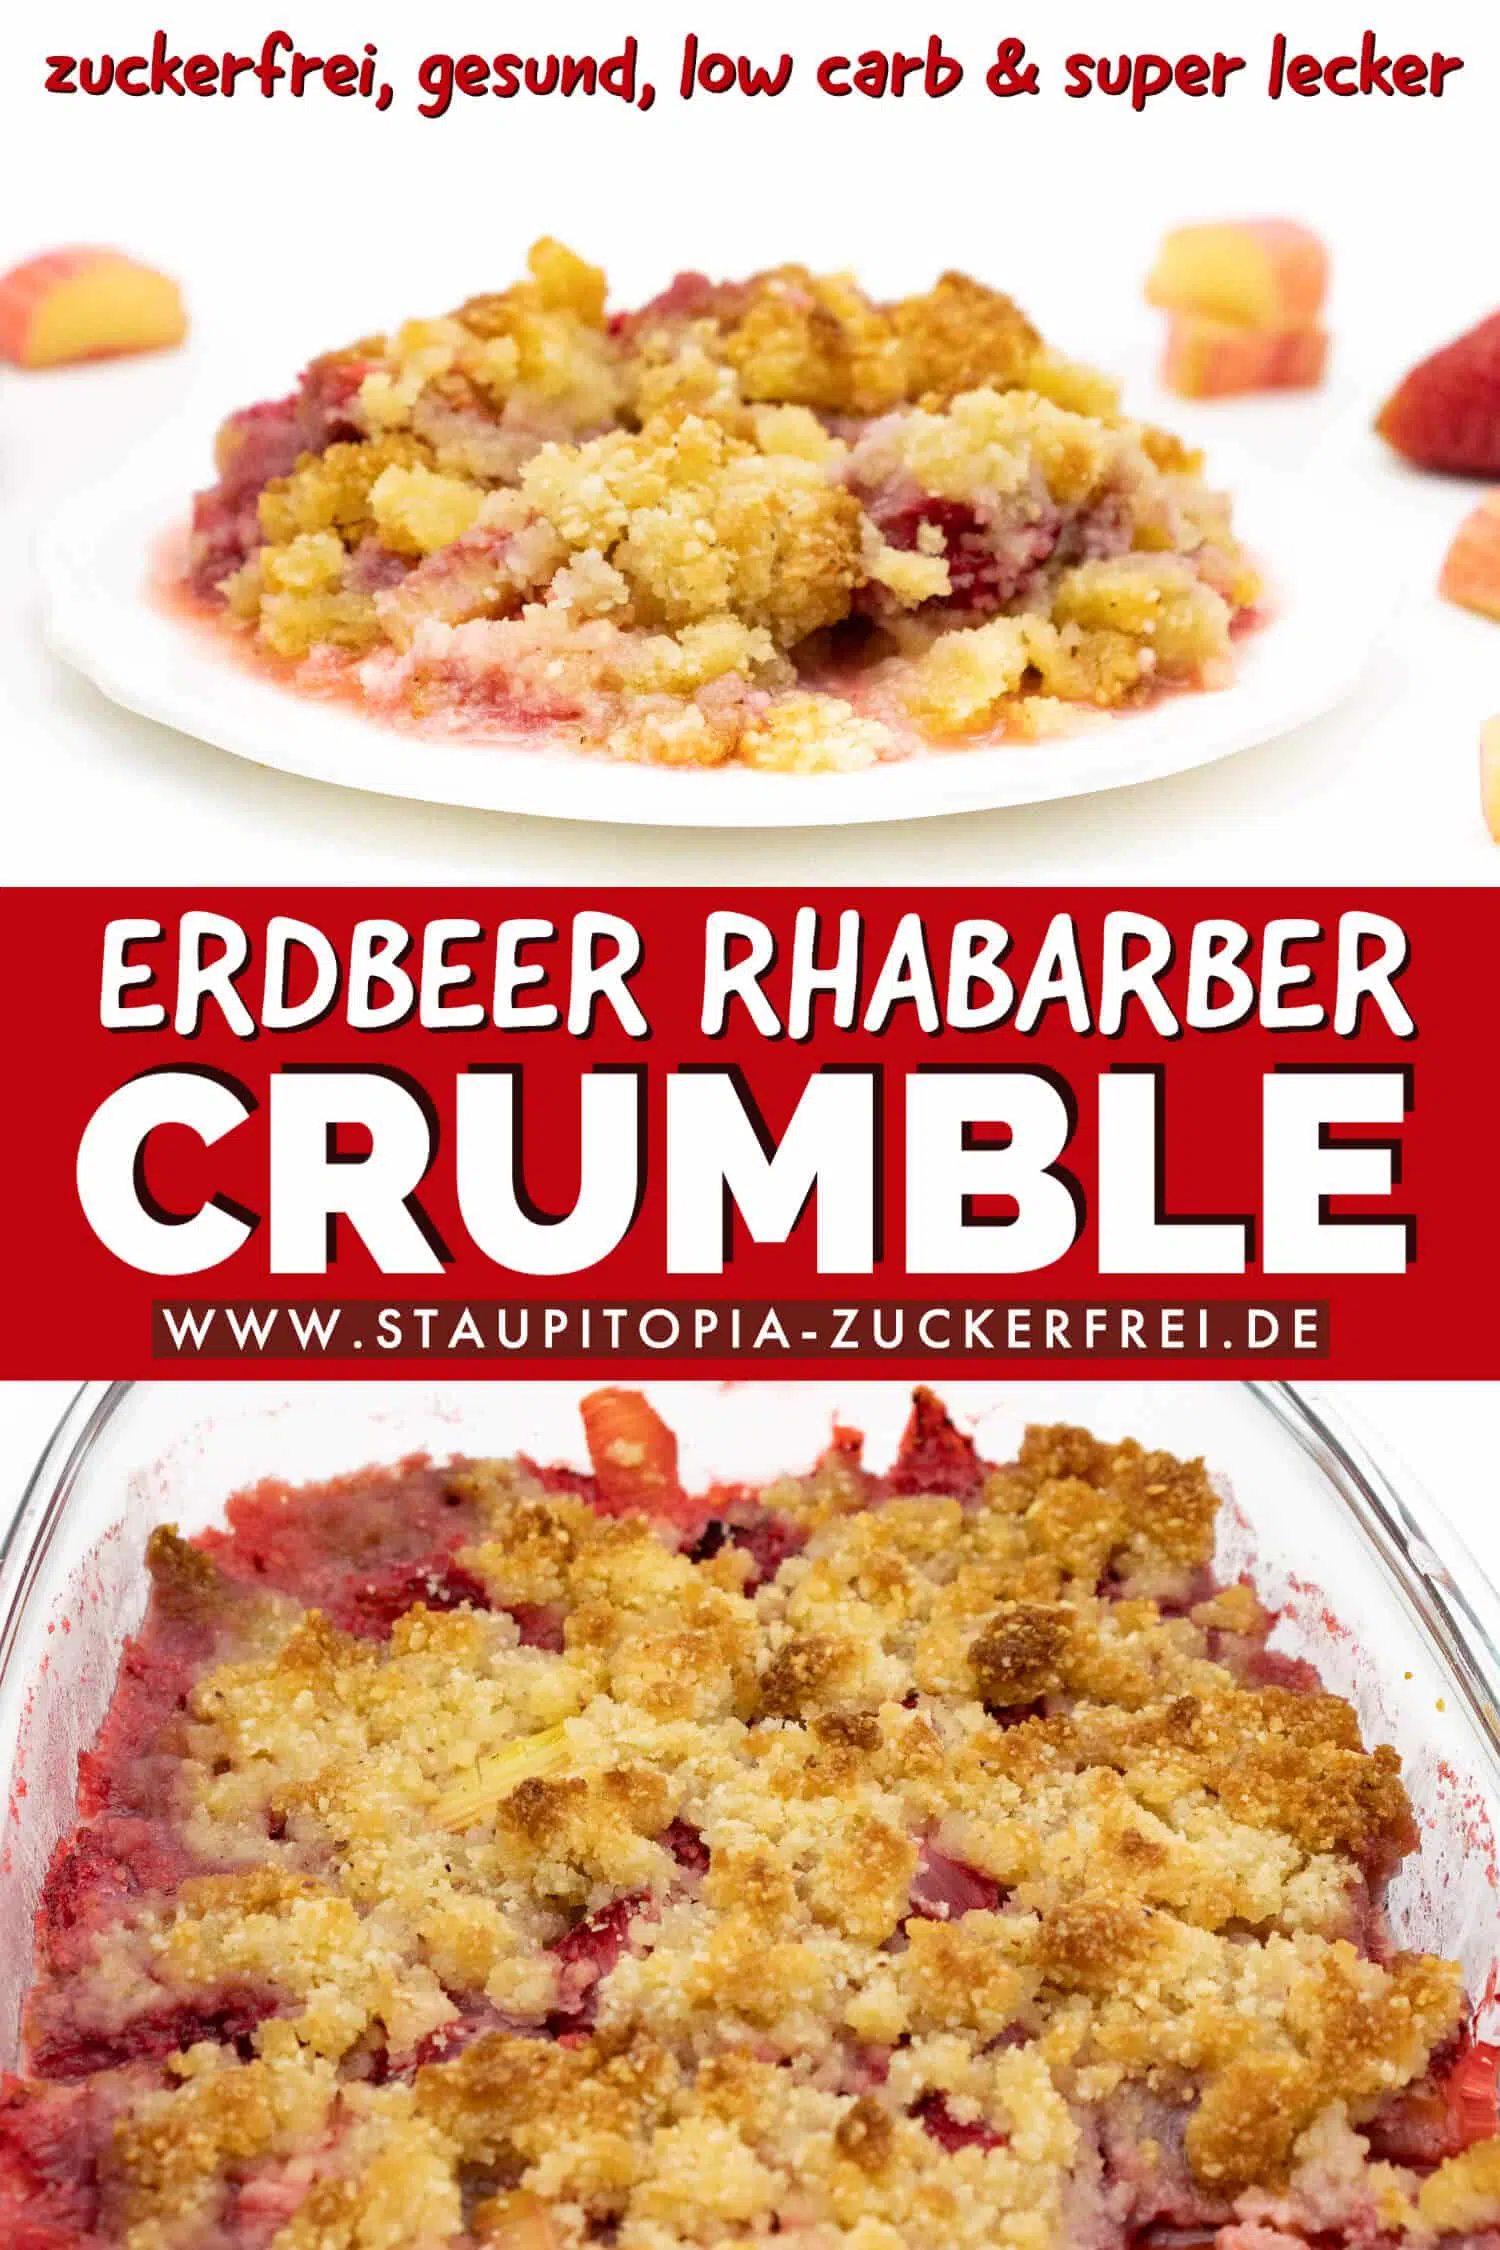 Low Carb Erdbeer Rhabarber Crumble ohne Zucker selber machen